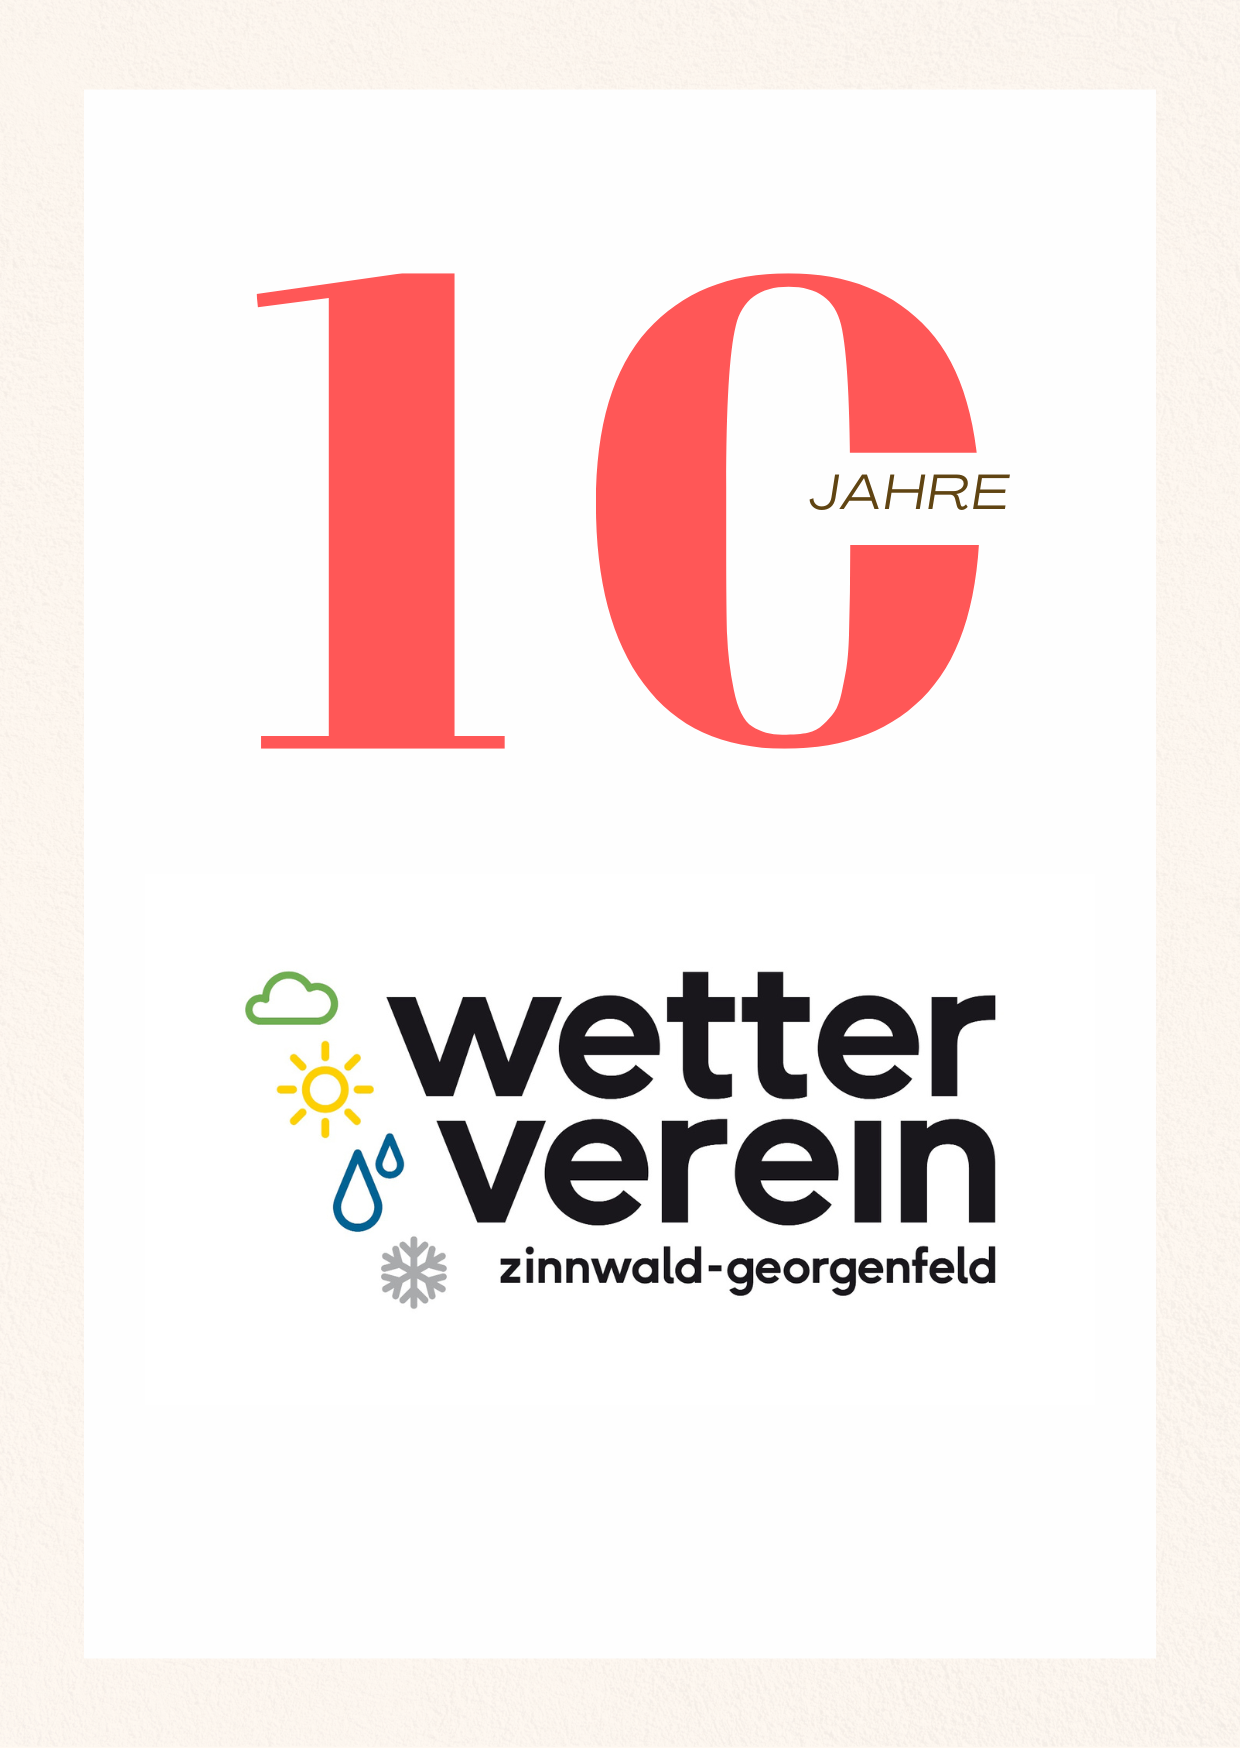 Featured image for “10 Jahre Wetterverein Zinnwald-Georgenfeld”